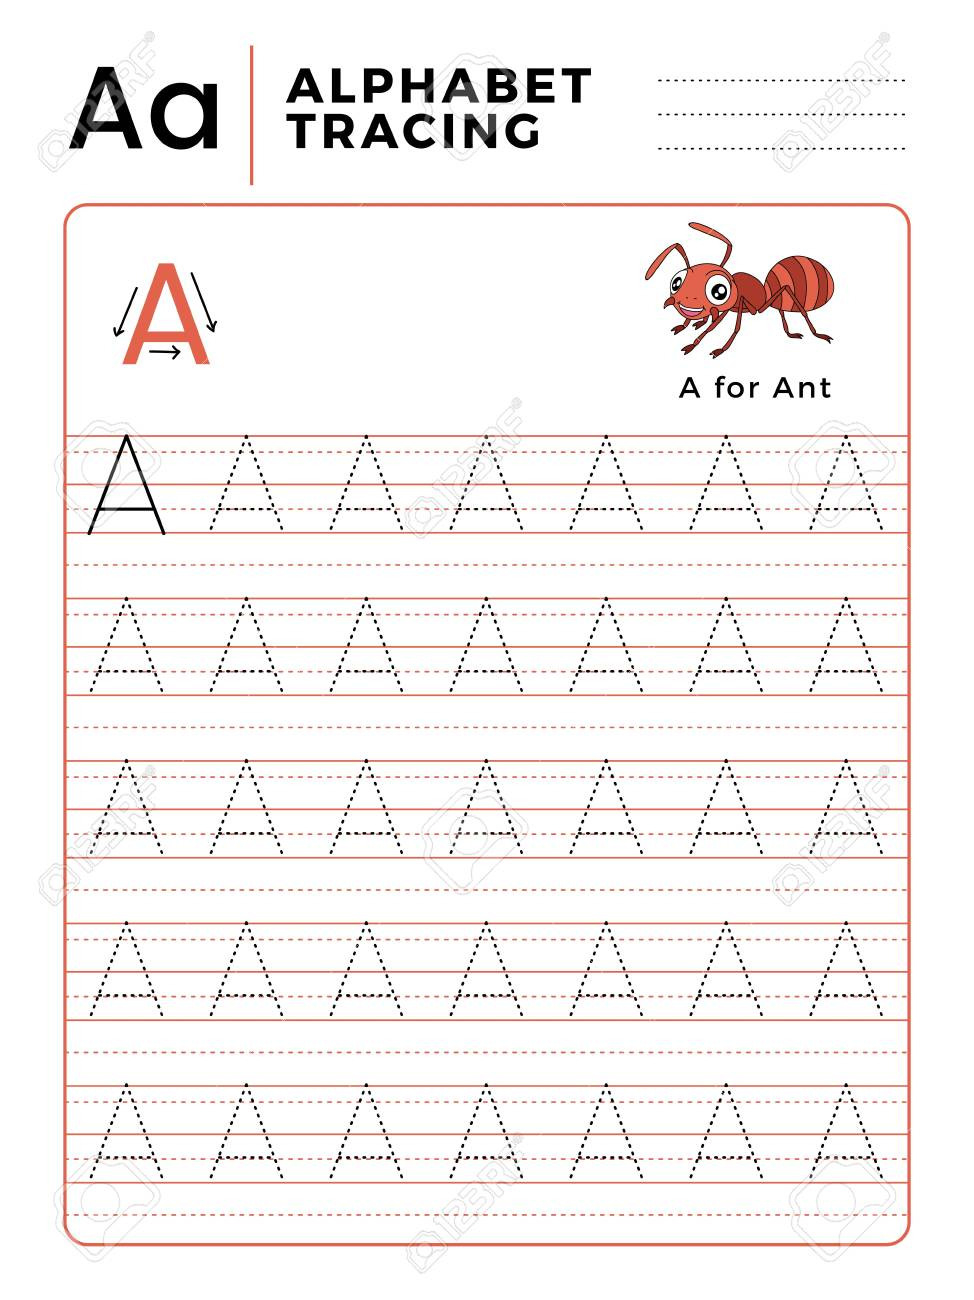 preschool worksheets alphabet db excelcom